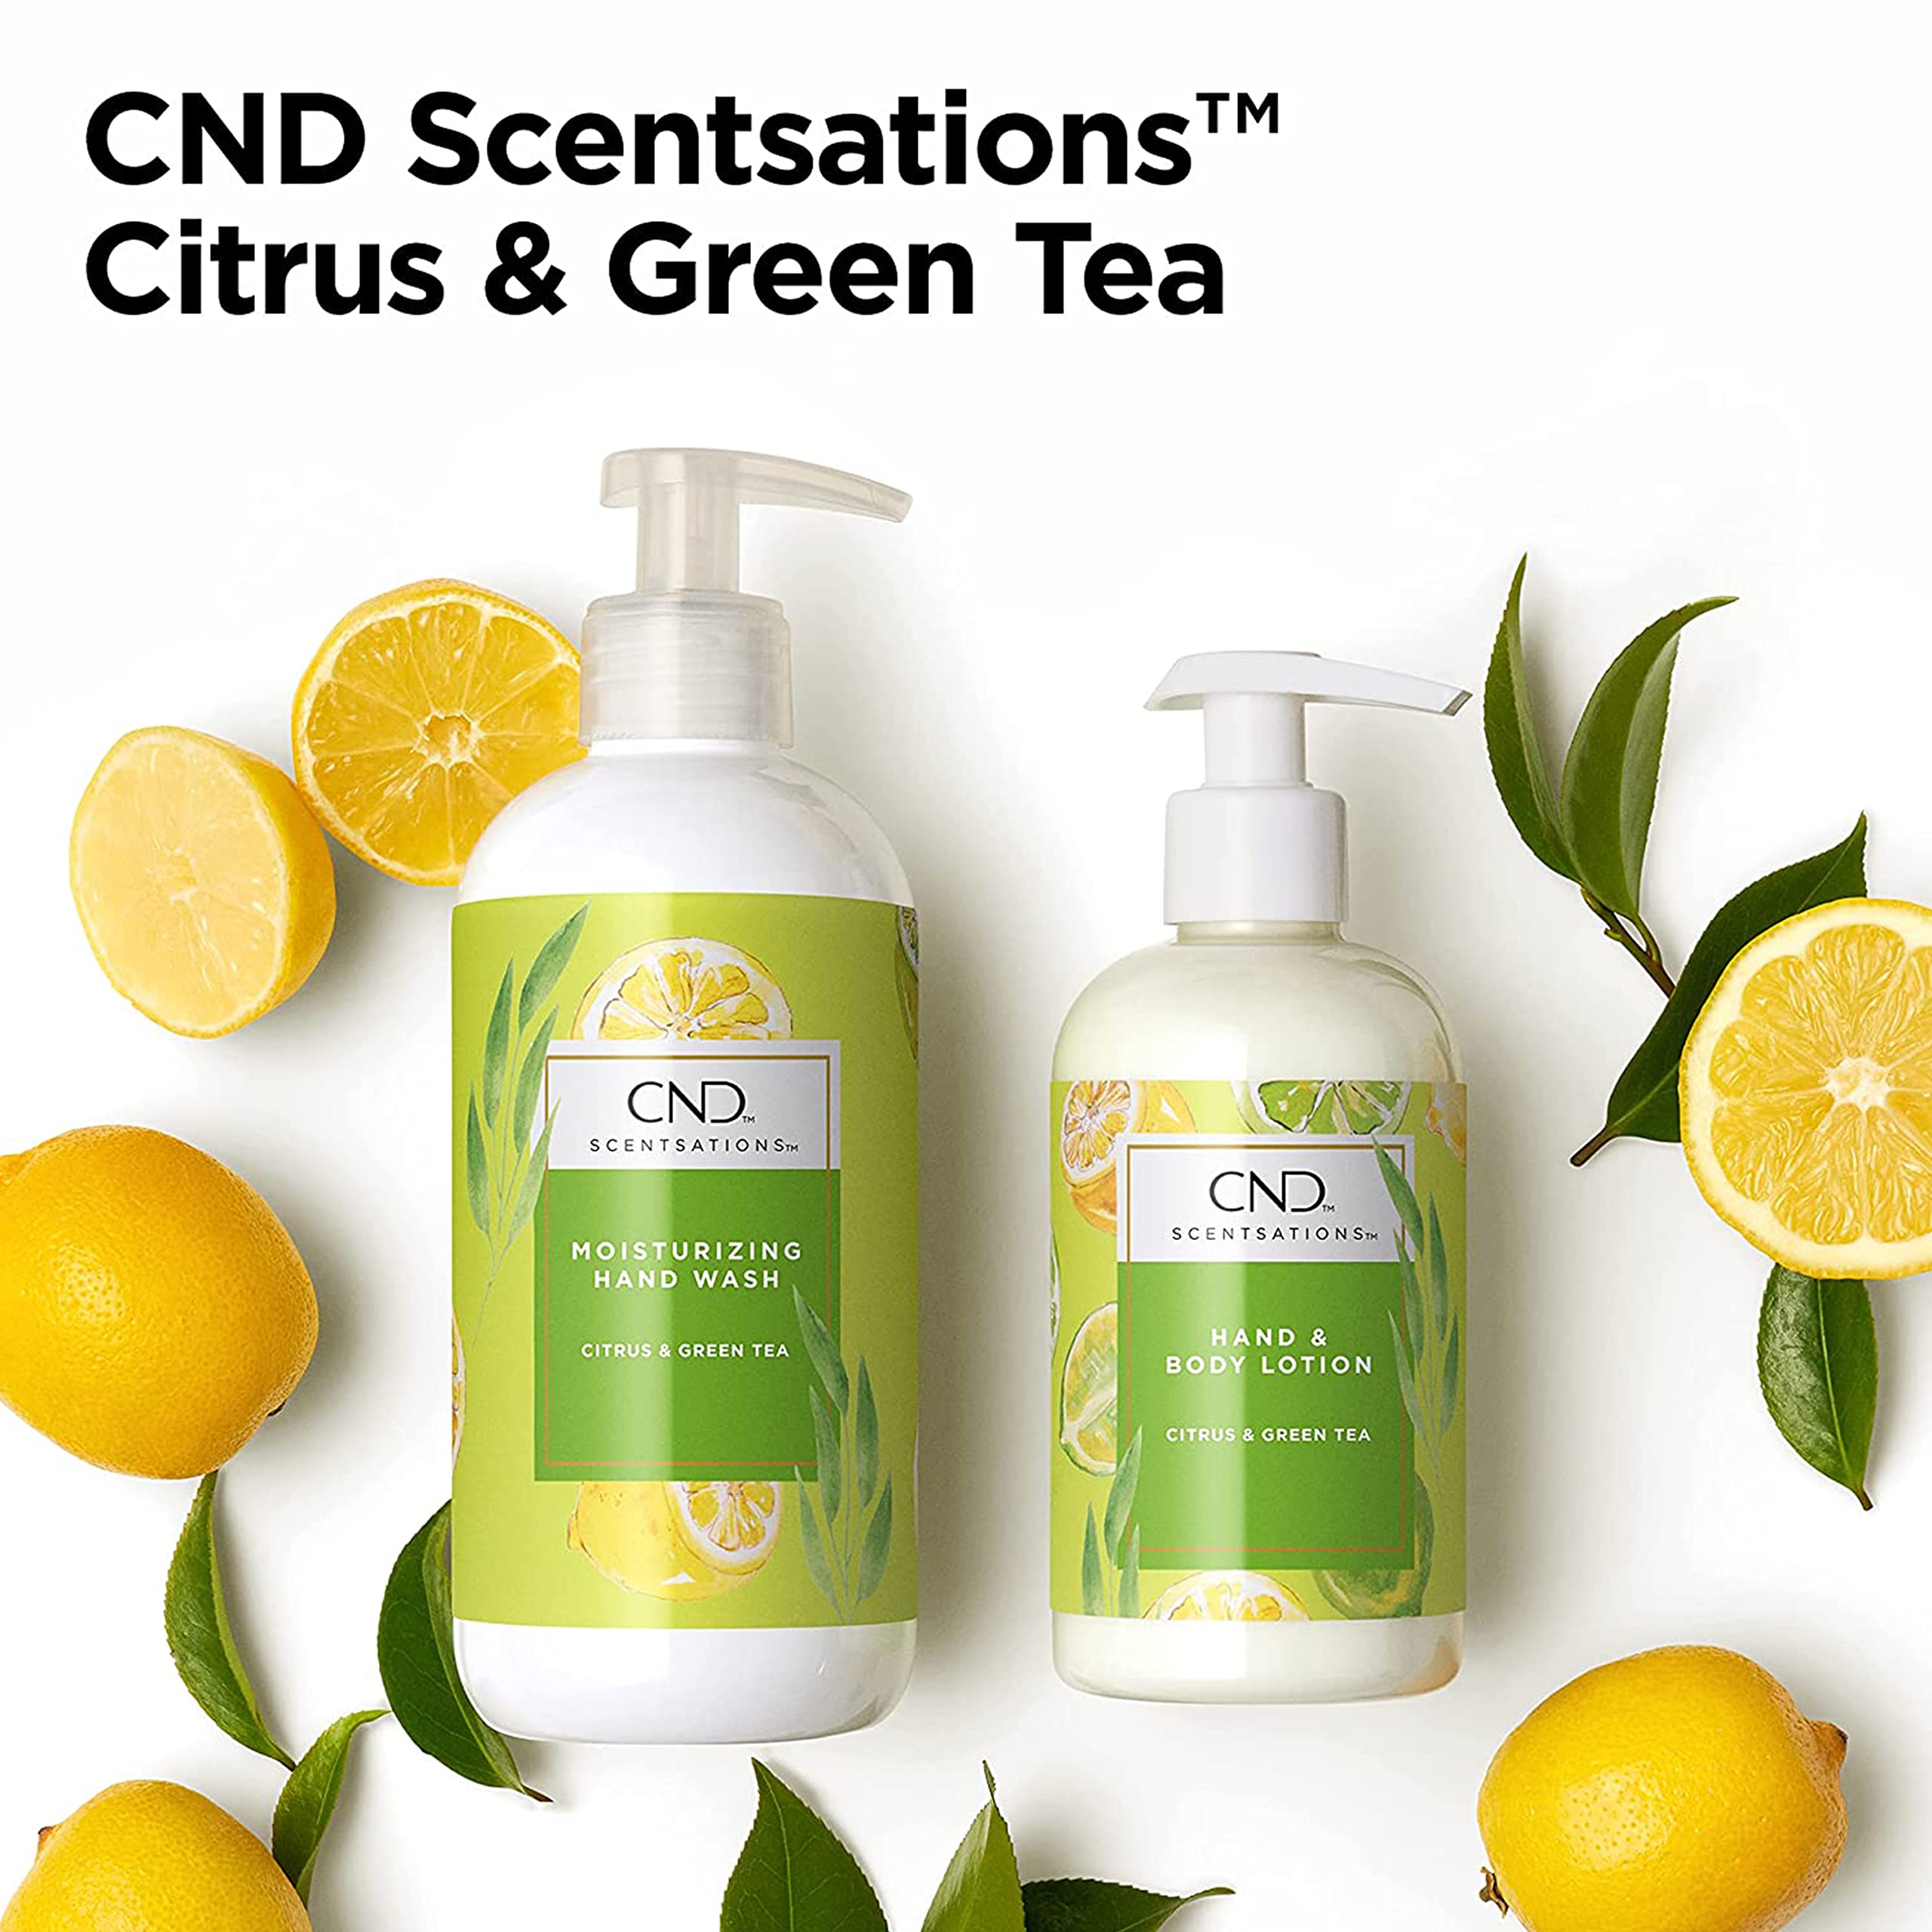 CND Scentsations Liquid Hand Wash & Body Lotion, Vegan Moisturizing Deep Cleanser, Formulated with Glycerin & Jojoba Oil, Citrus & Green Tea, 13.2 fl. oz